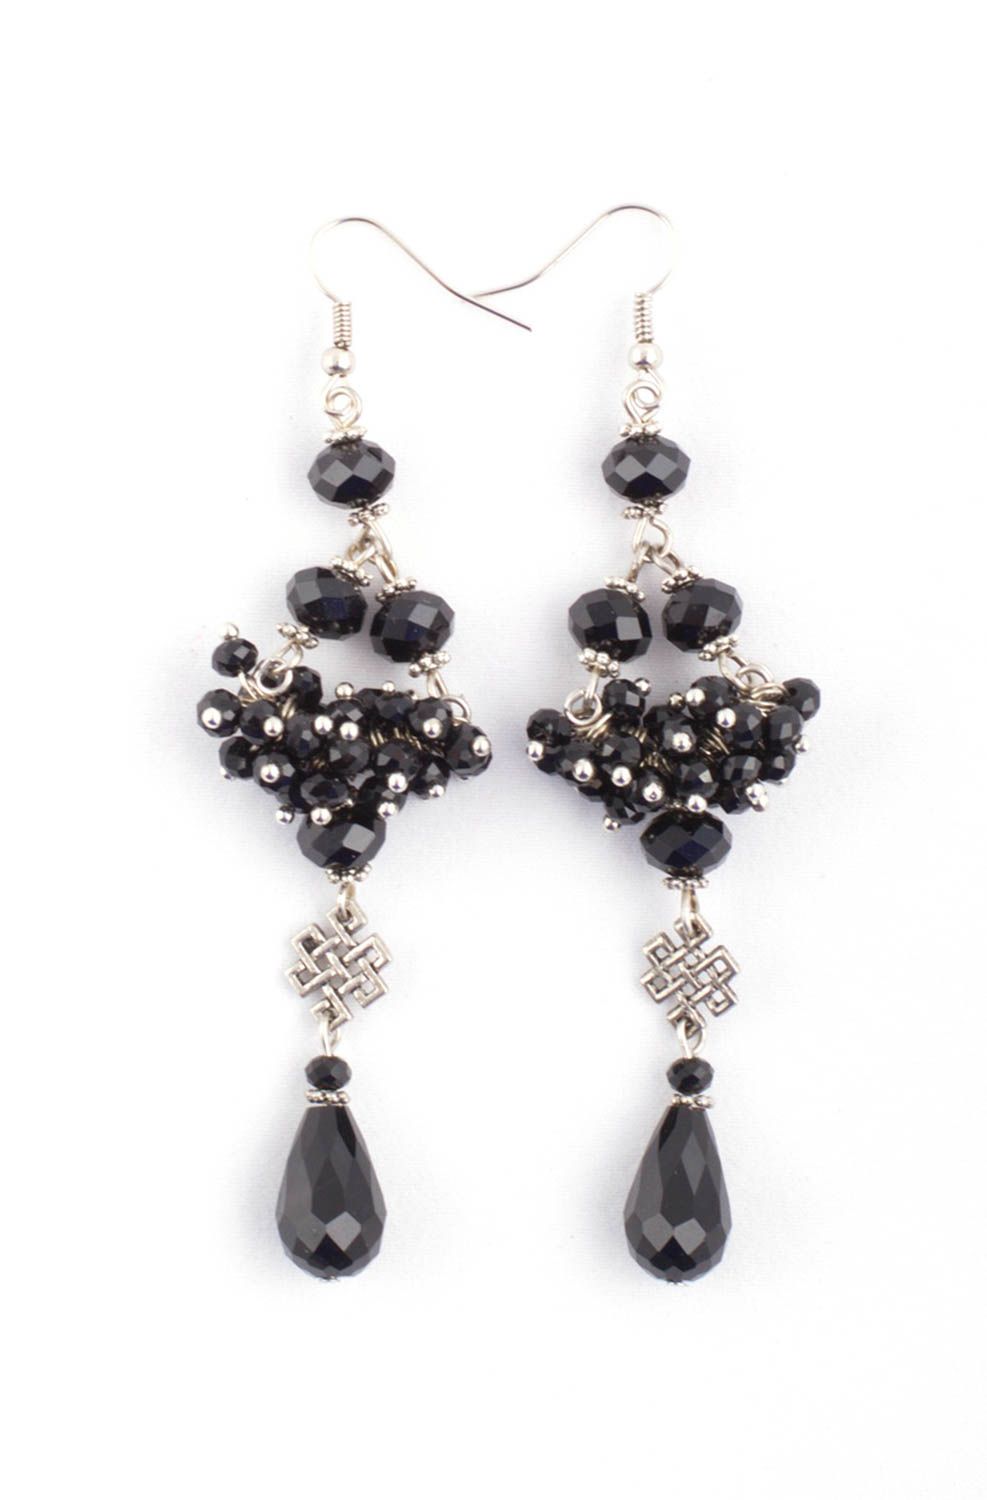 Handmade elegant cute earrings designer stylish jewelry feminine earrings photo 3